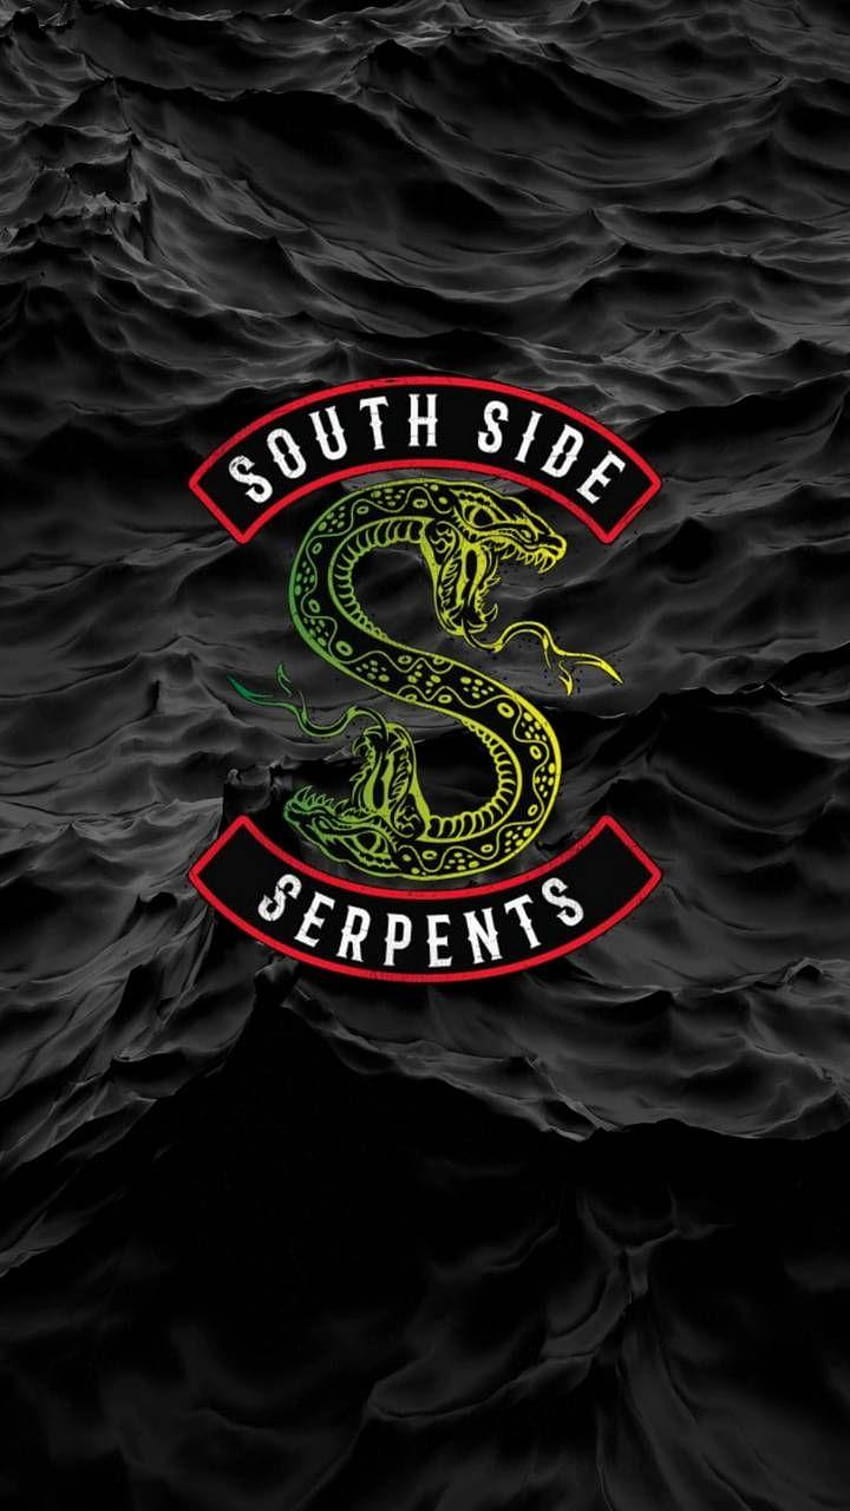 Lili Reinhart Reveals Her Cheeky Idea for Bettys Southside Serpent Tattoo   Sweetwater Secrets  YouTube